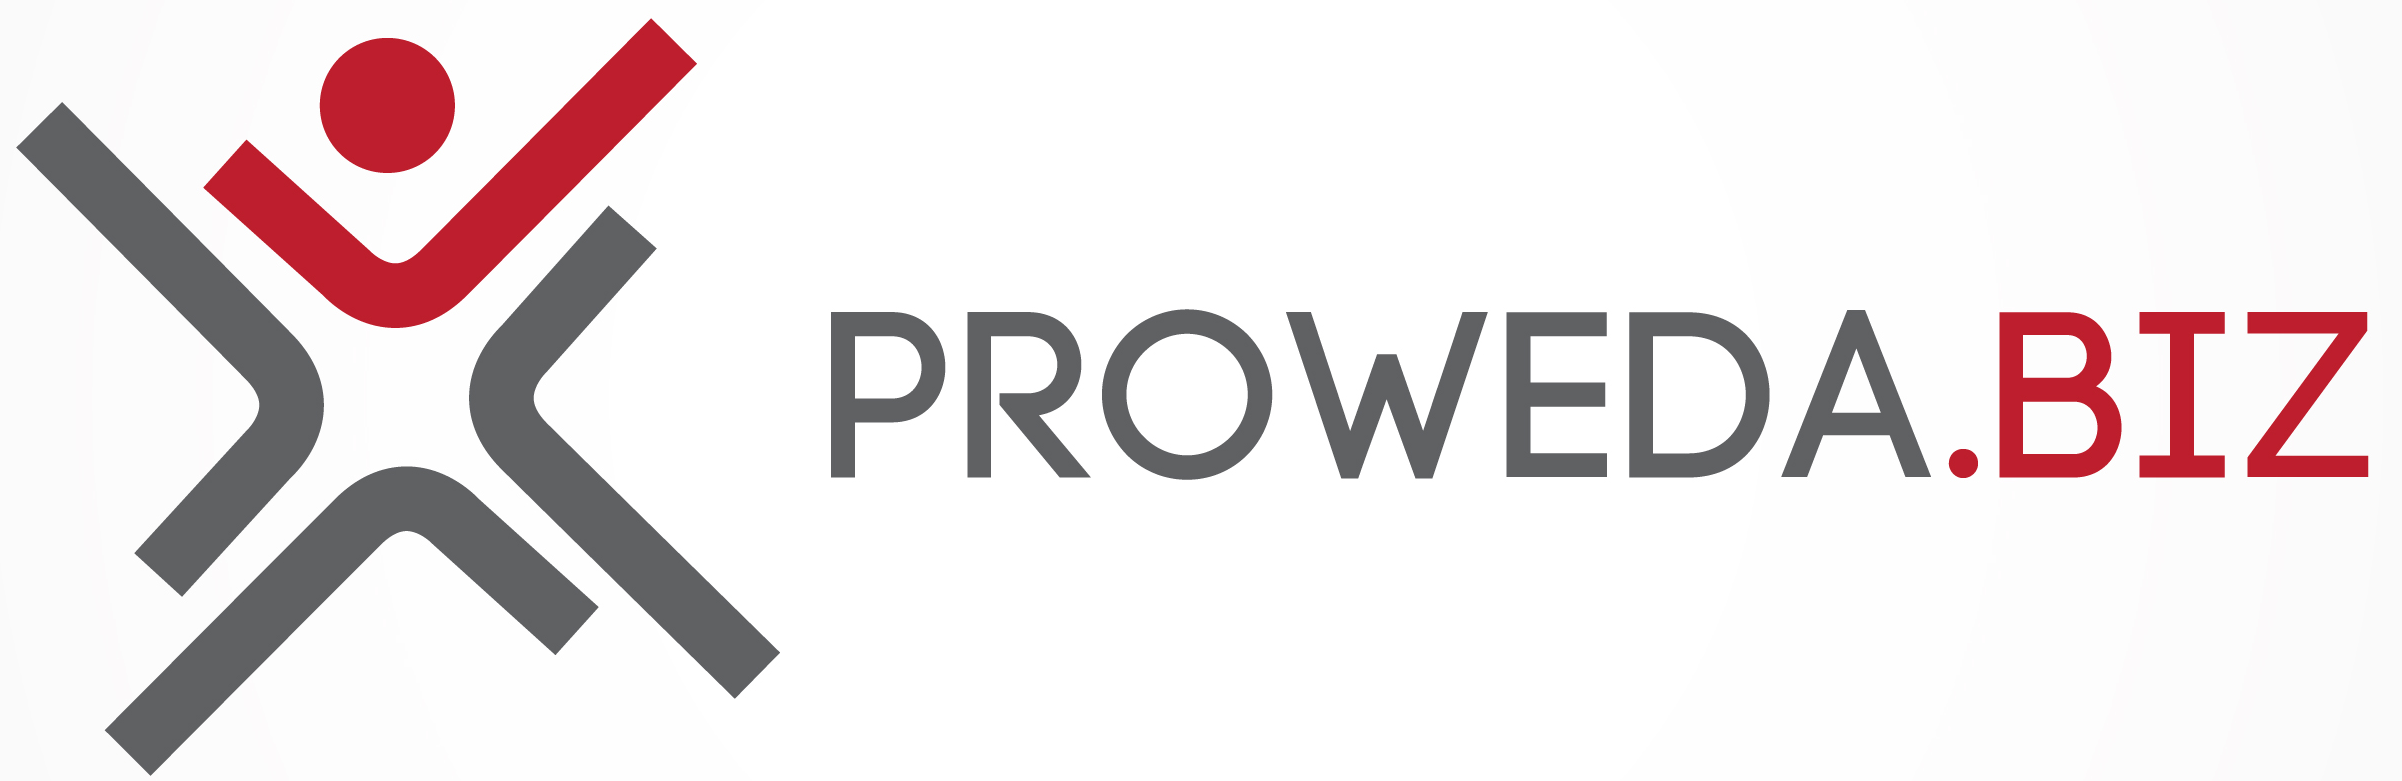 Proweda.biz logo